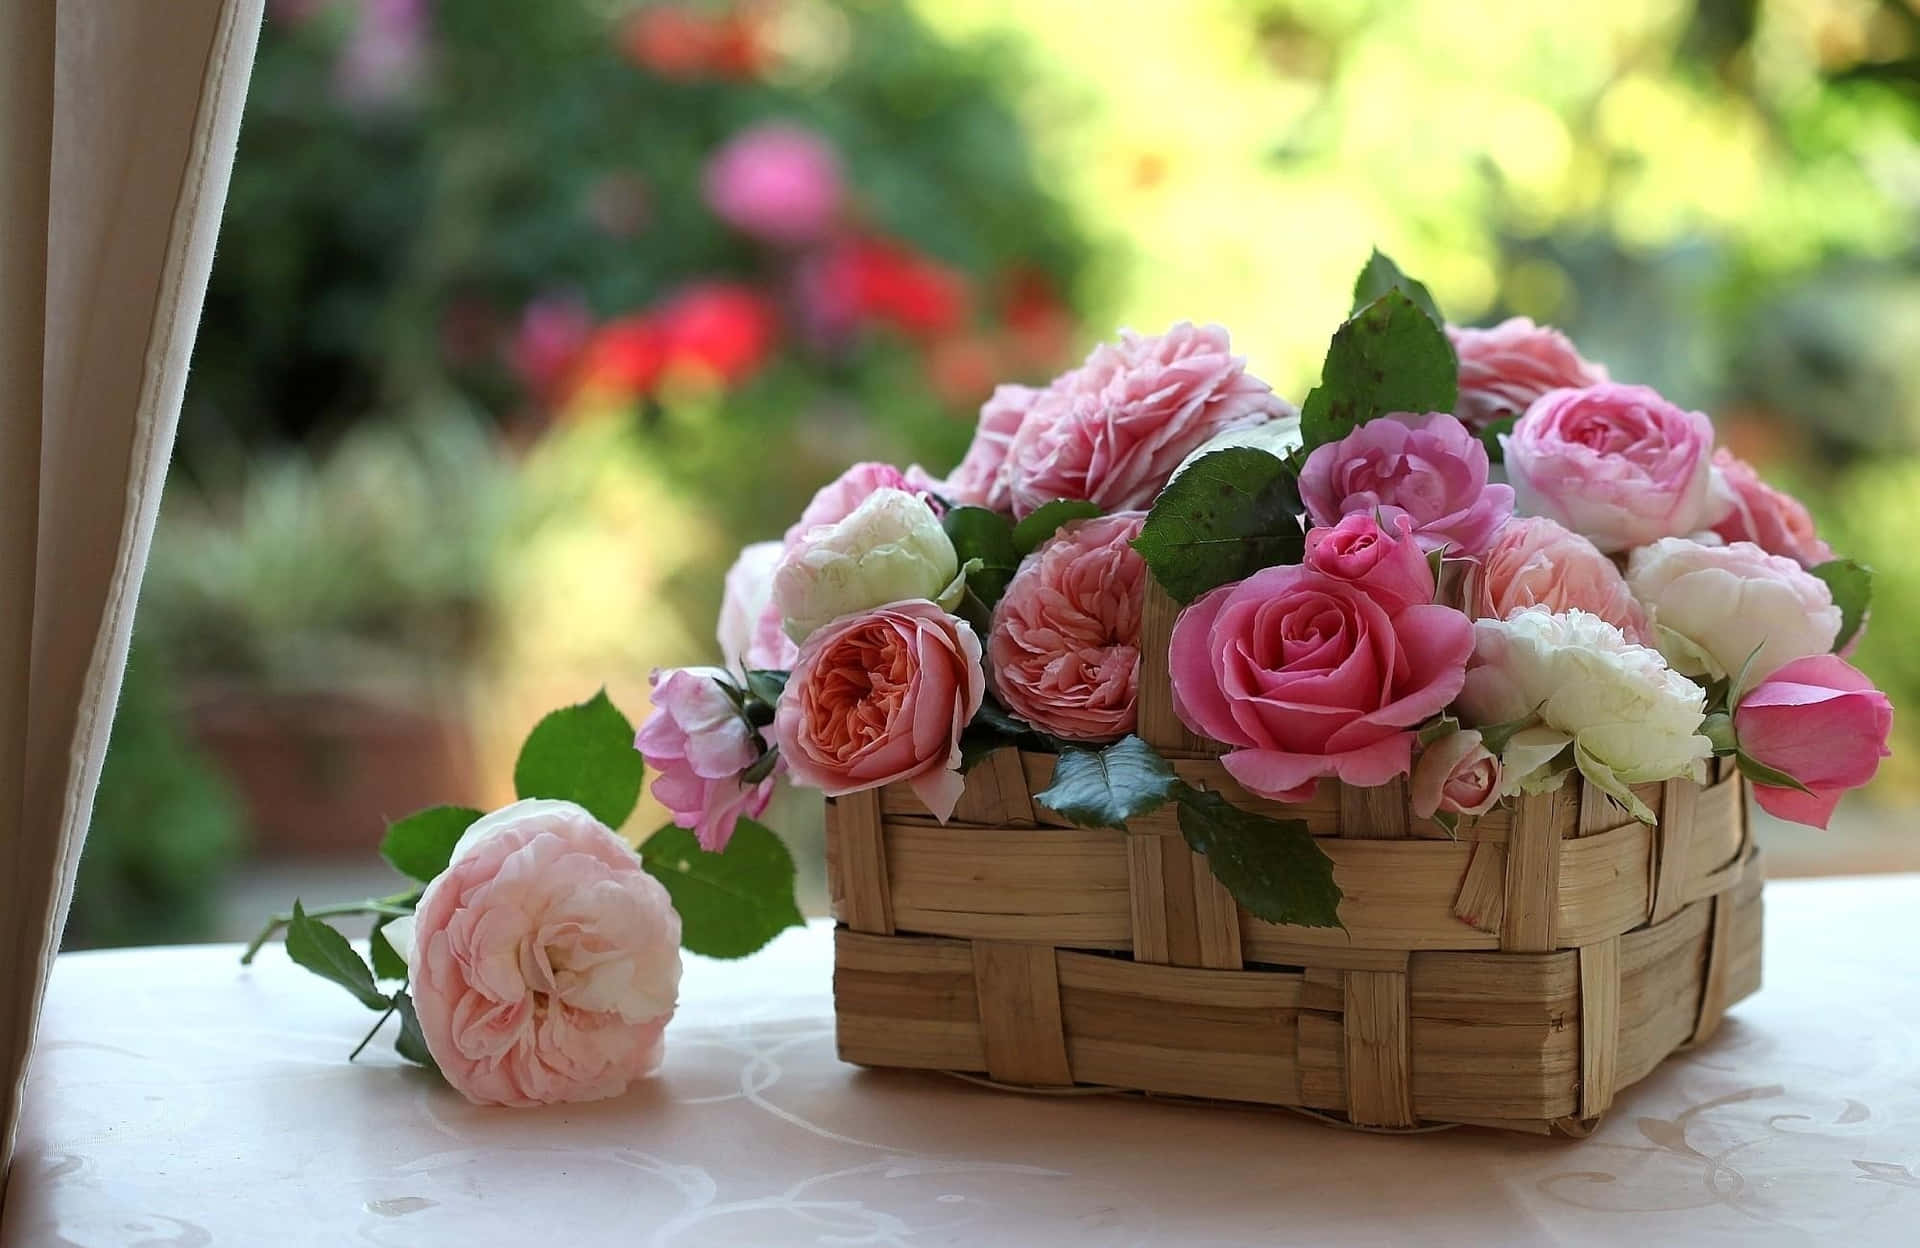 Bellissimaimmagine Fotografica Di Un Bouquet Di Rose In Un Giardino